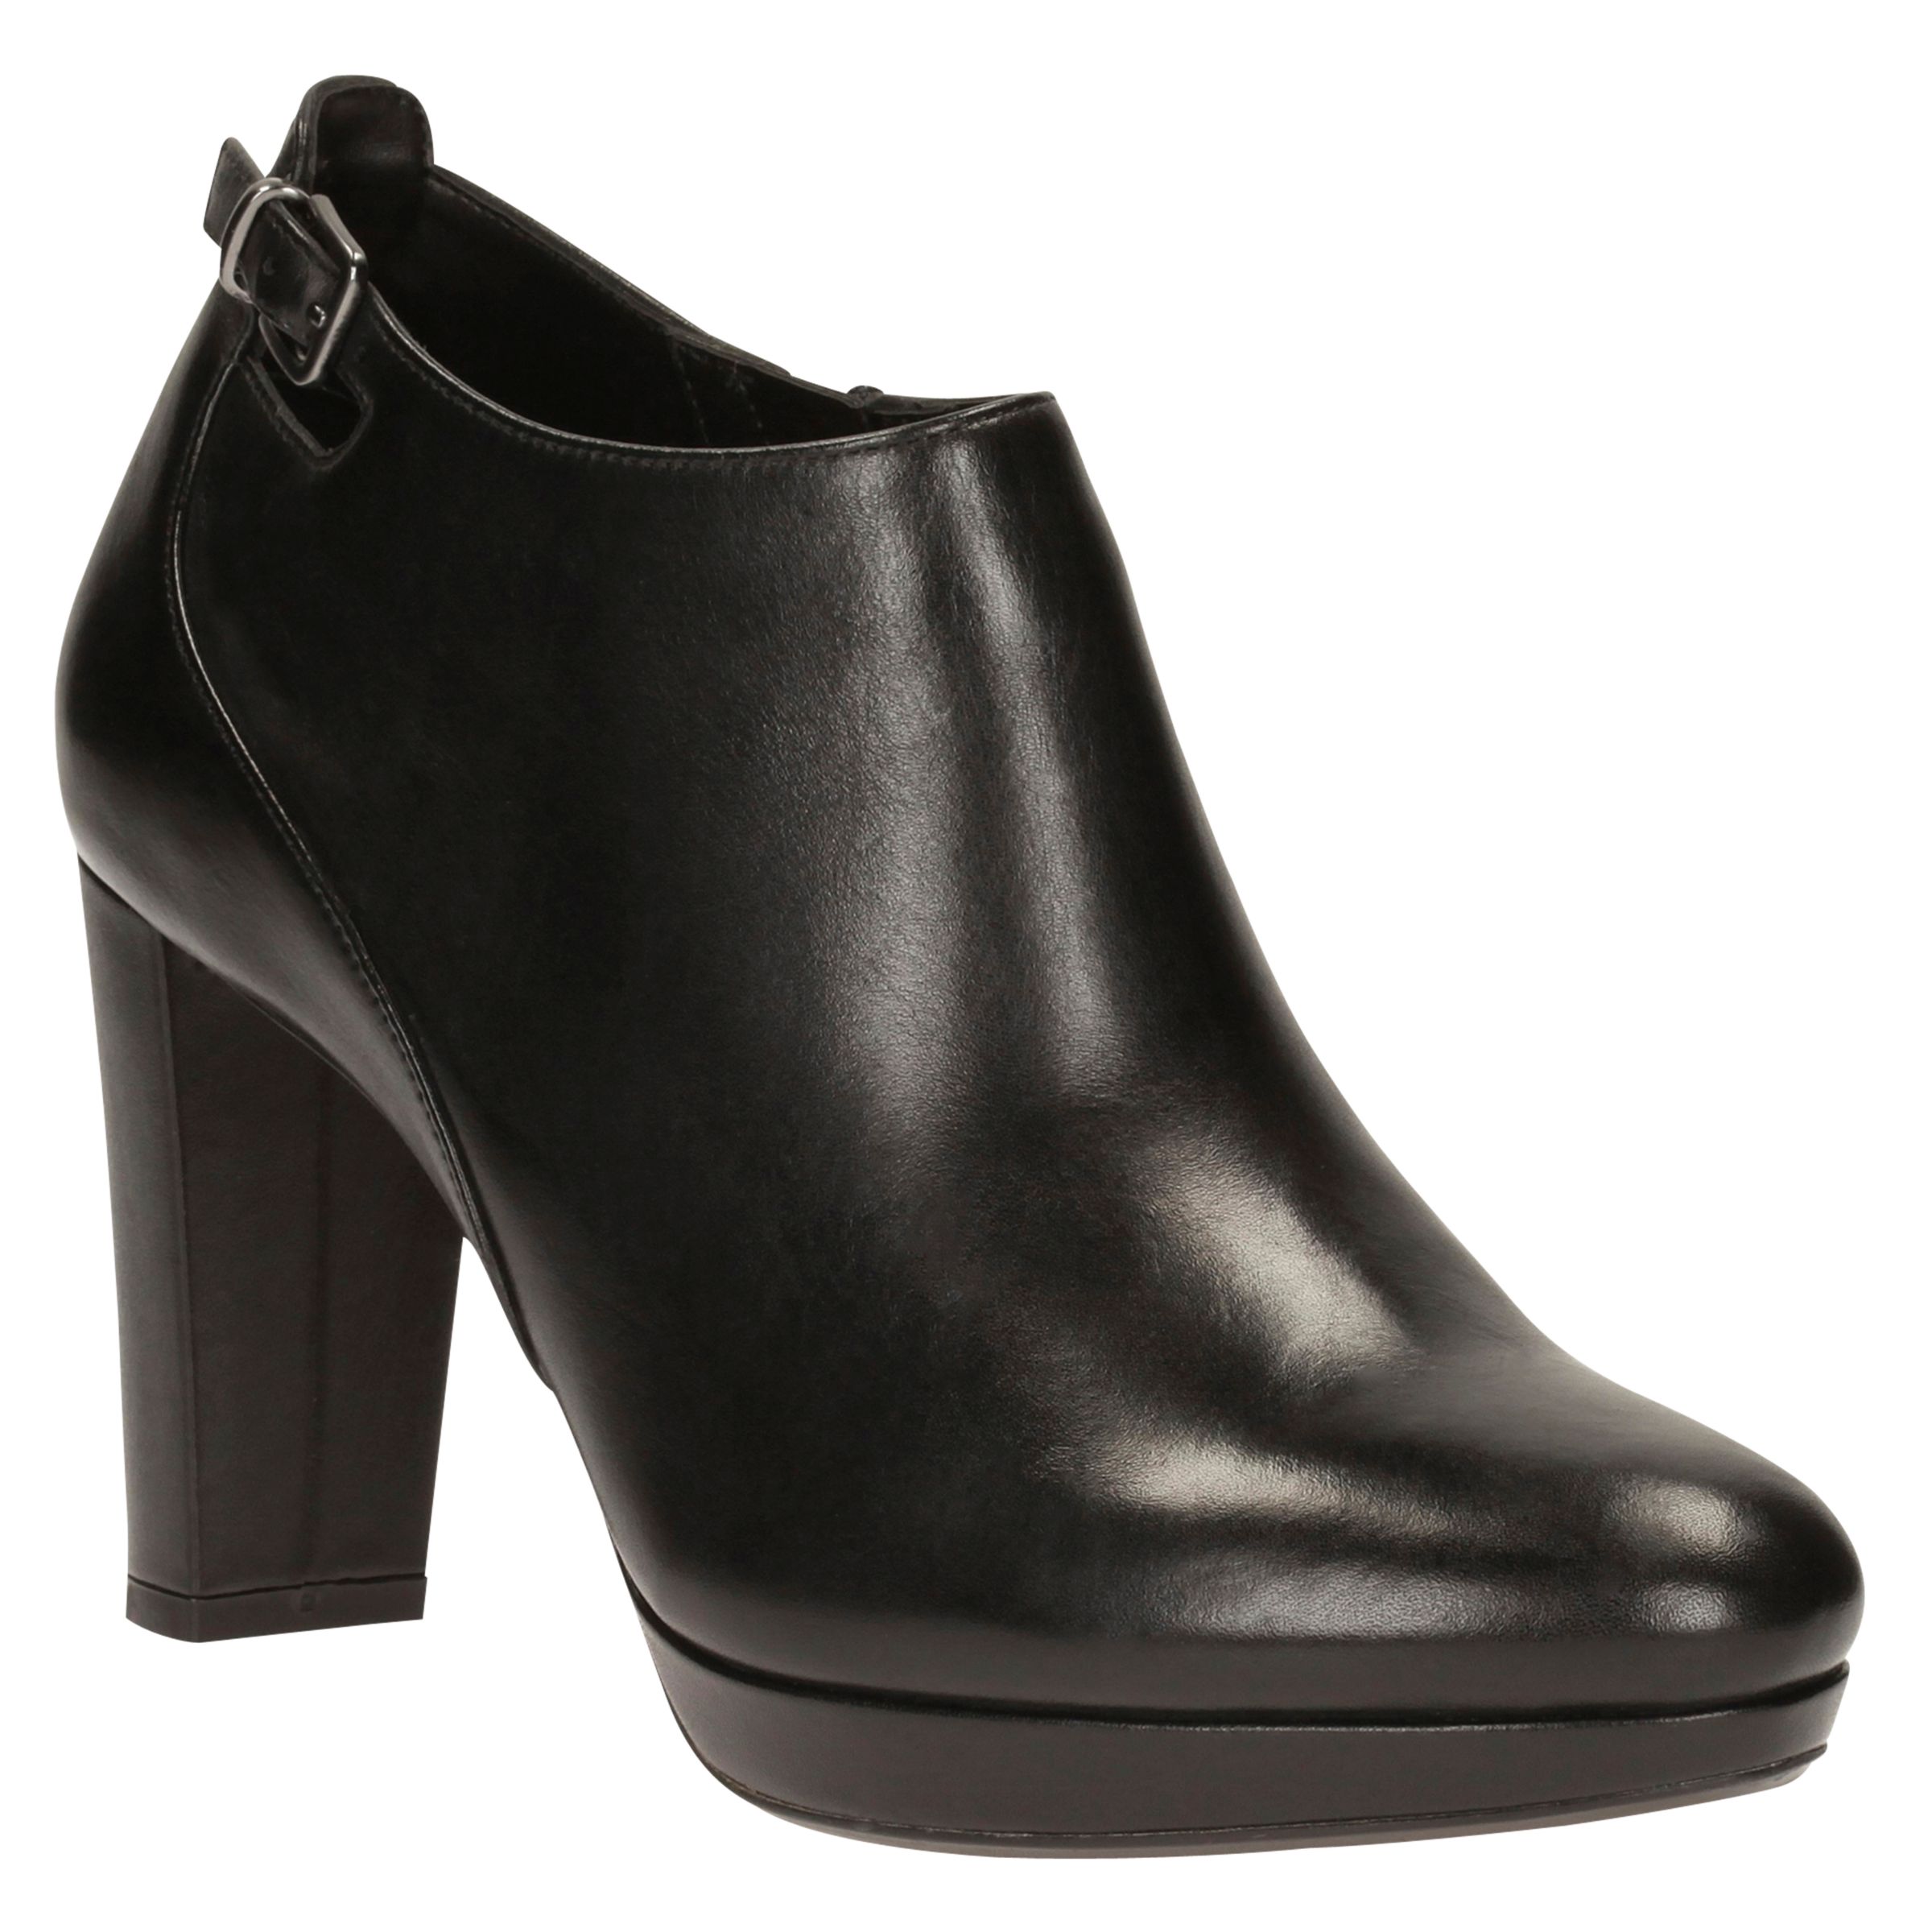 Clarks Kendra Spice Shoe Boots, Black 